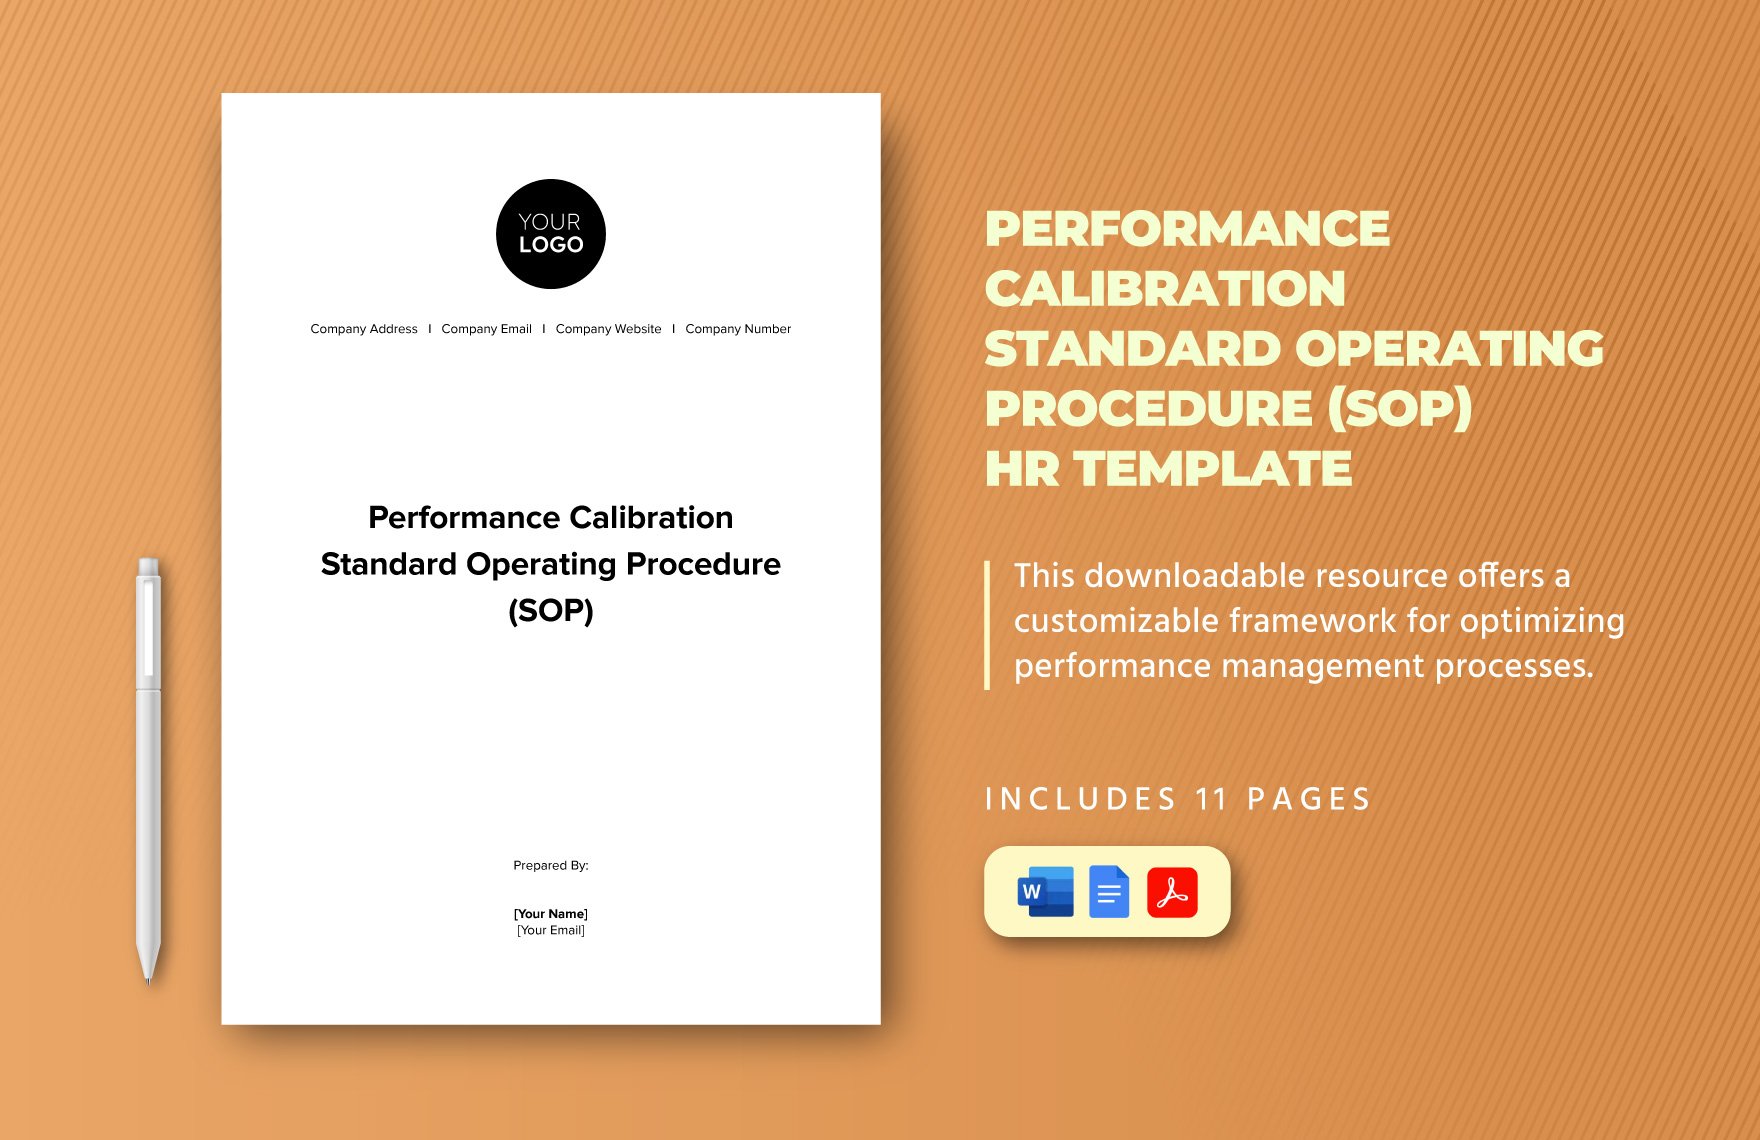 Performance Calibration Standard Operating Procedure (SOP) HR Template